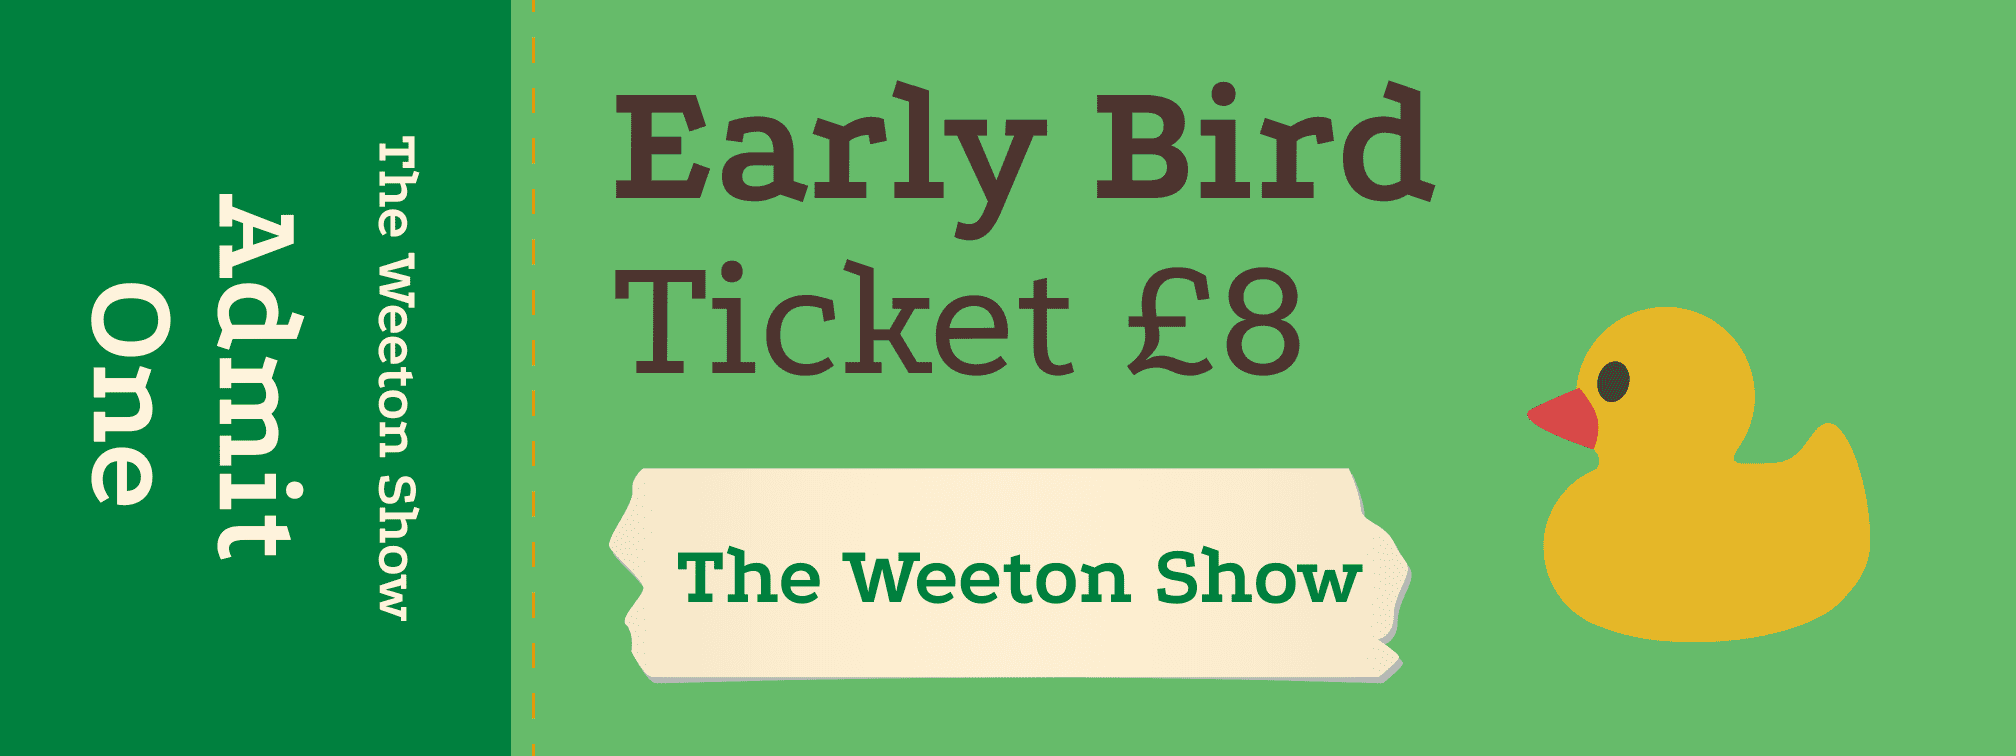 Weeton Show Early Bird Ticket